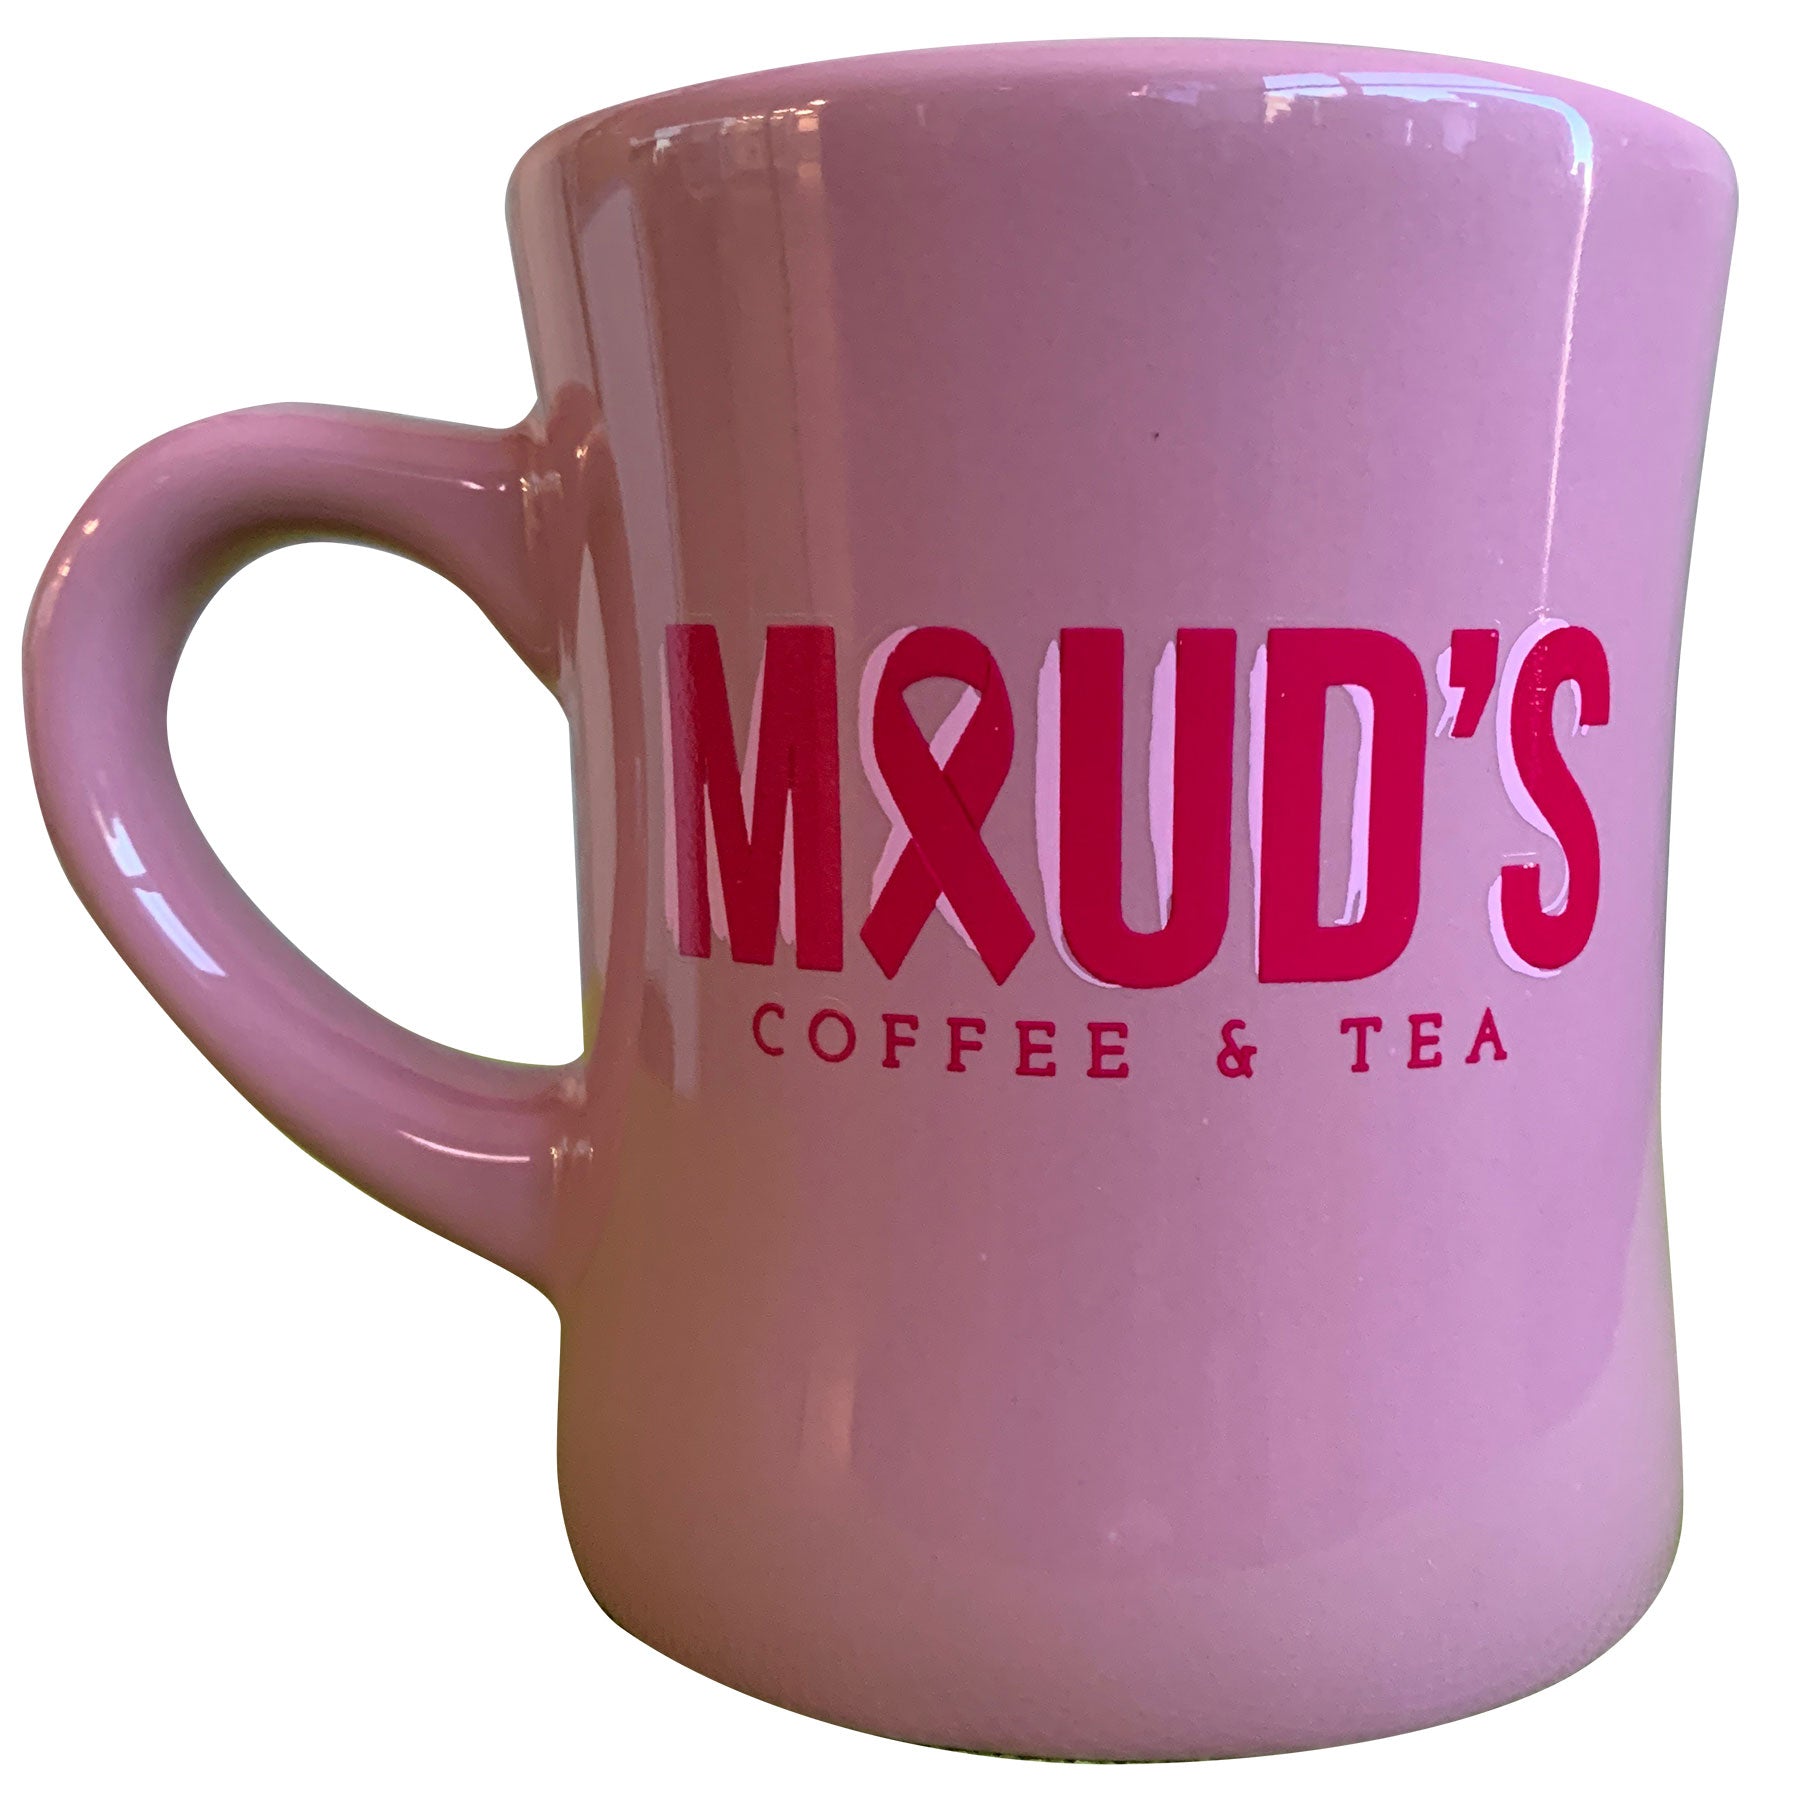 Maud's Travel Mug